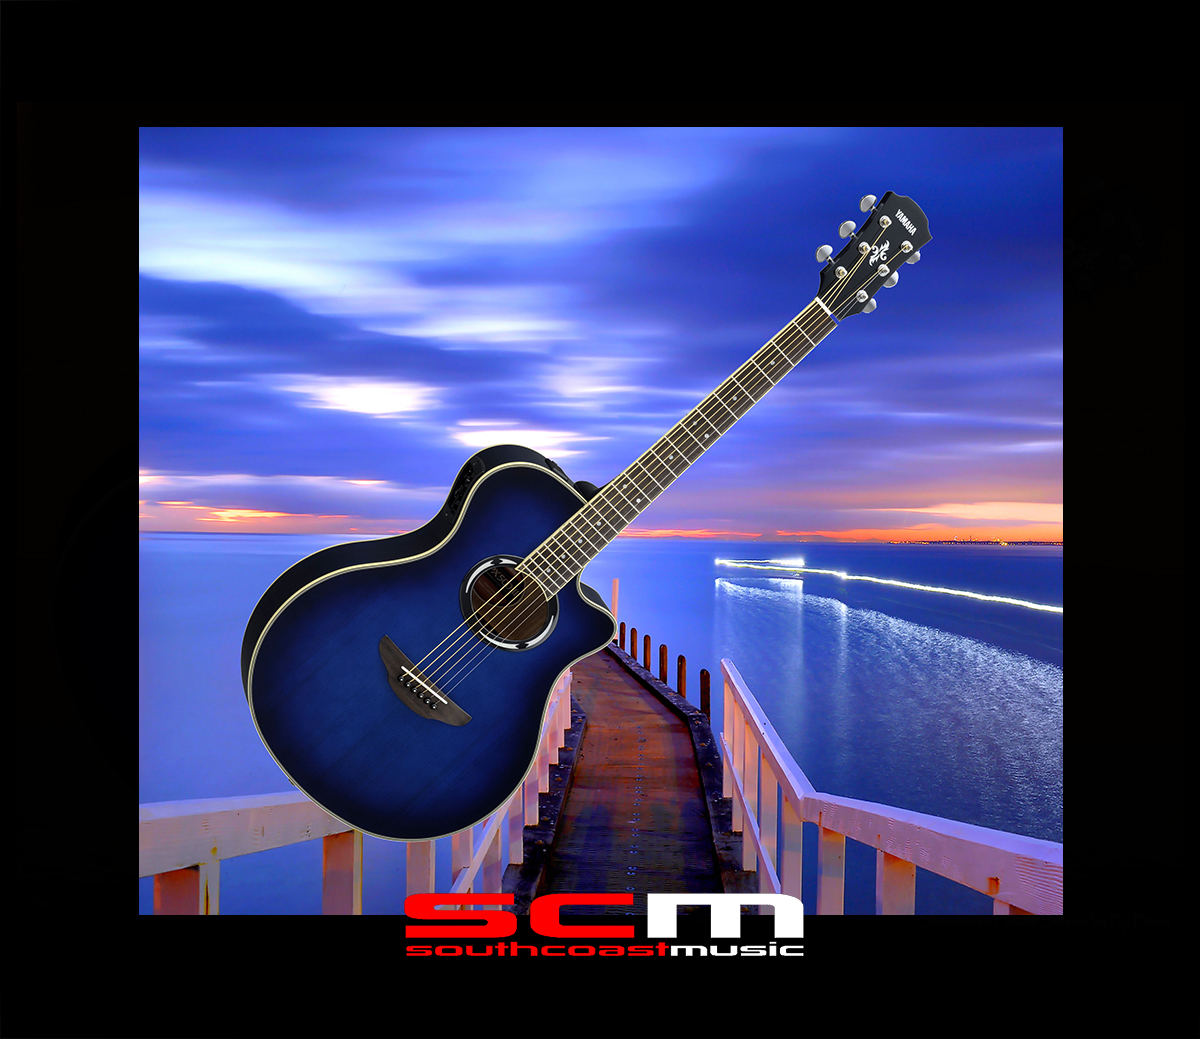 Yamaha APX500III OBB Oriental Blue Burst Acoustic Electric Guitar